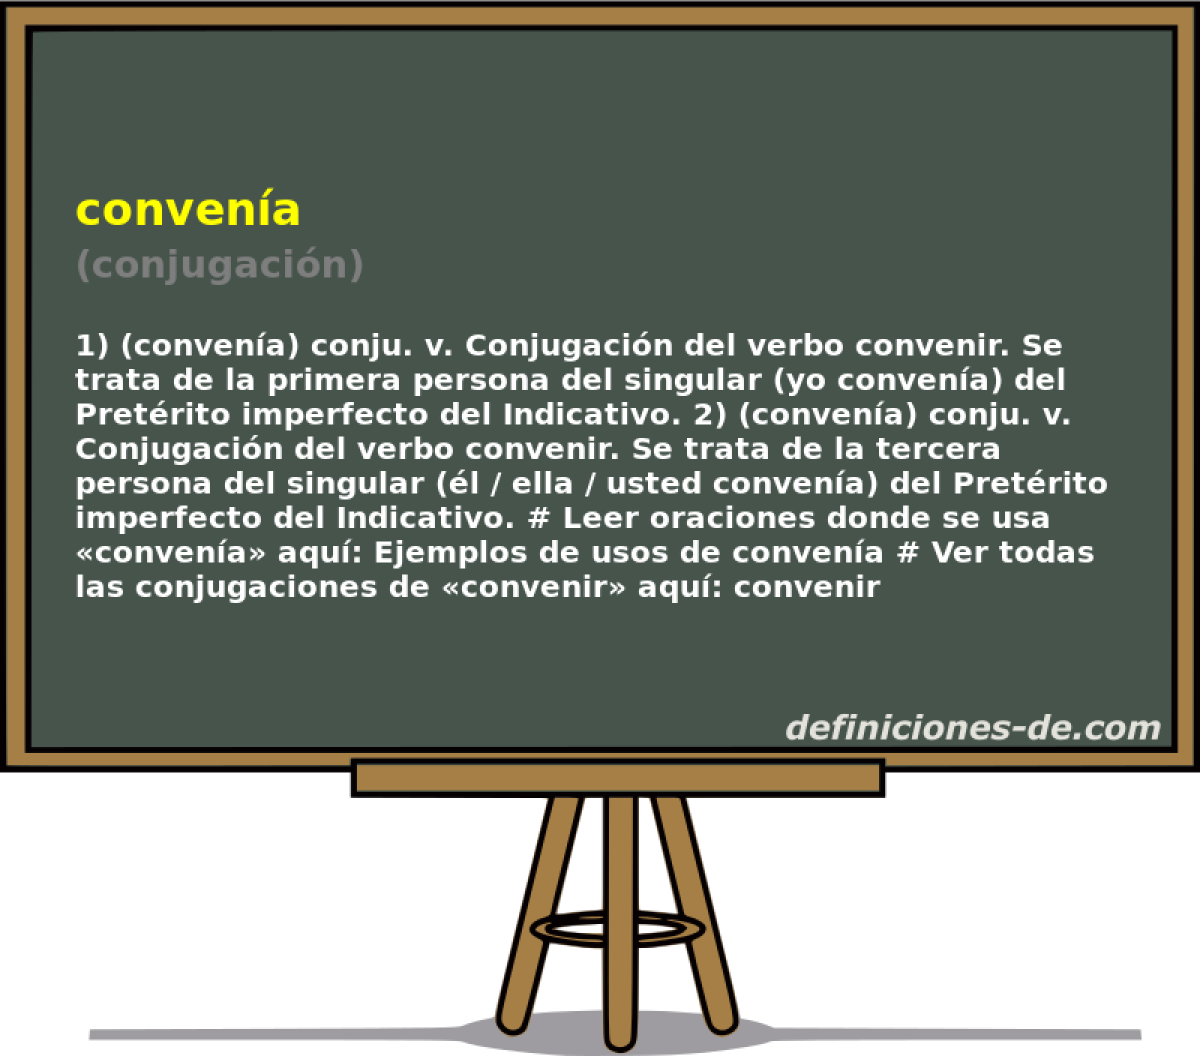 convena (conjugacin)